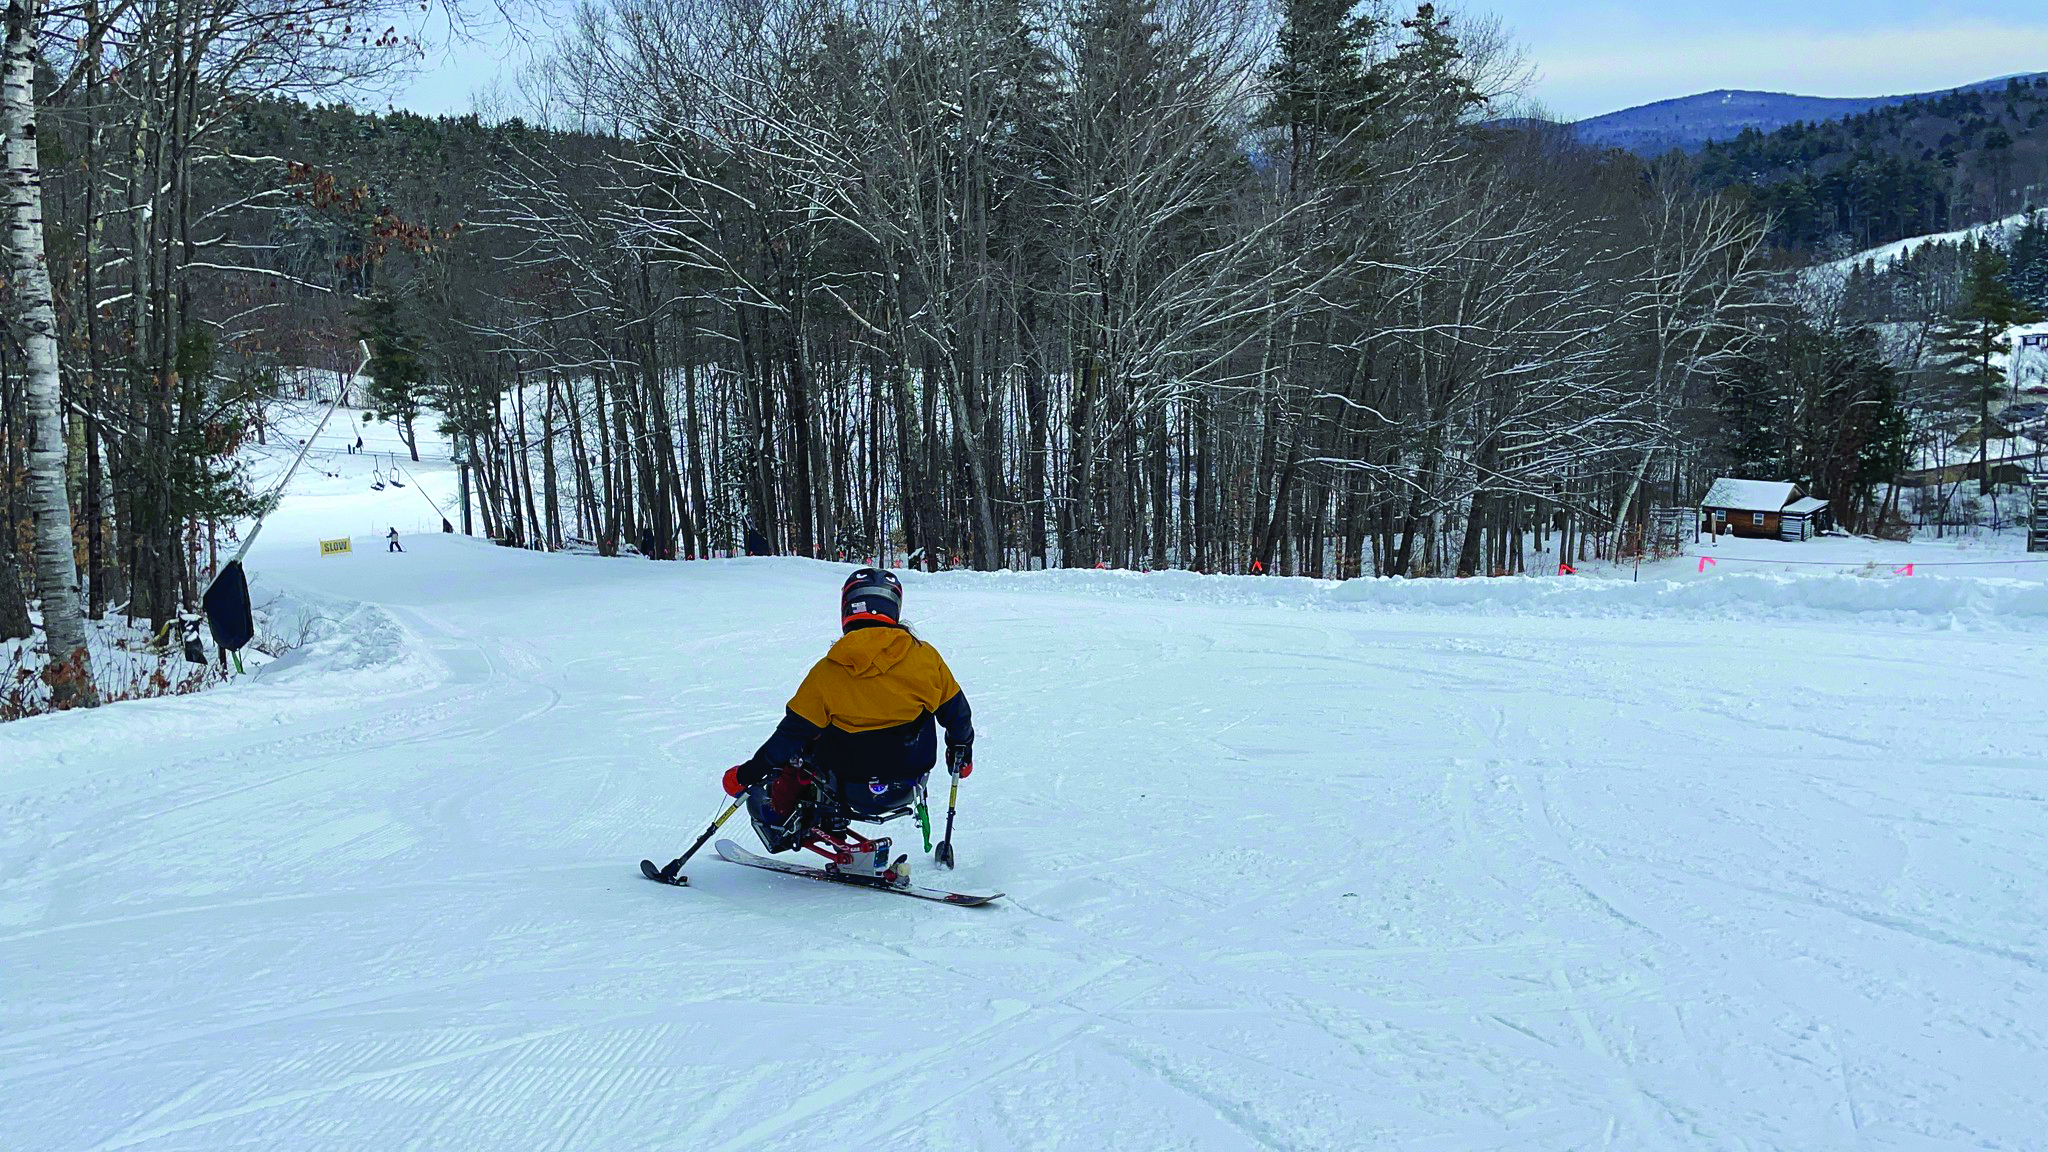 Mono skier skiing at the winter sports clini